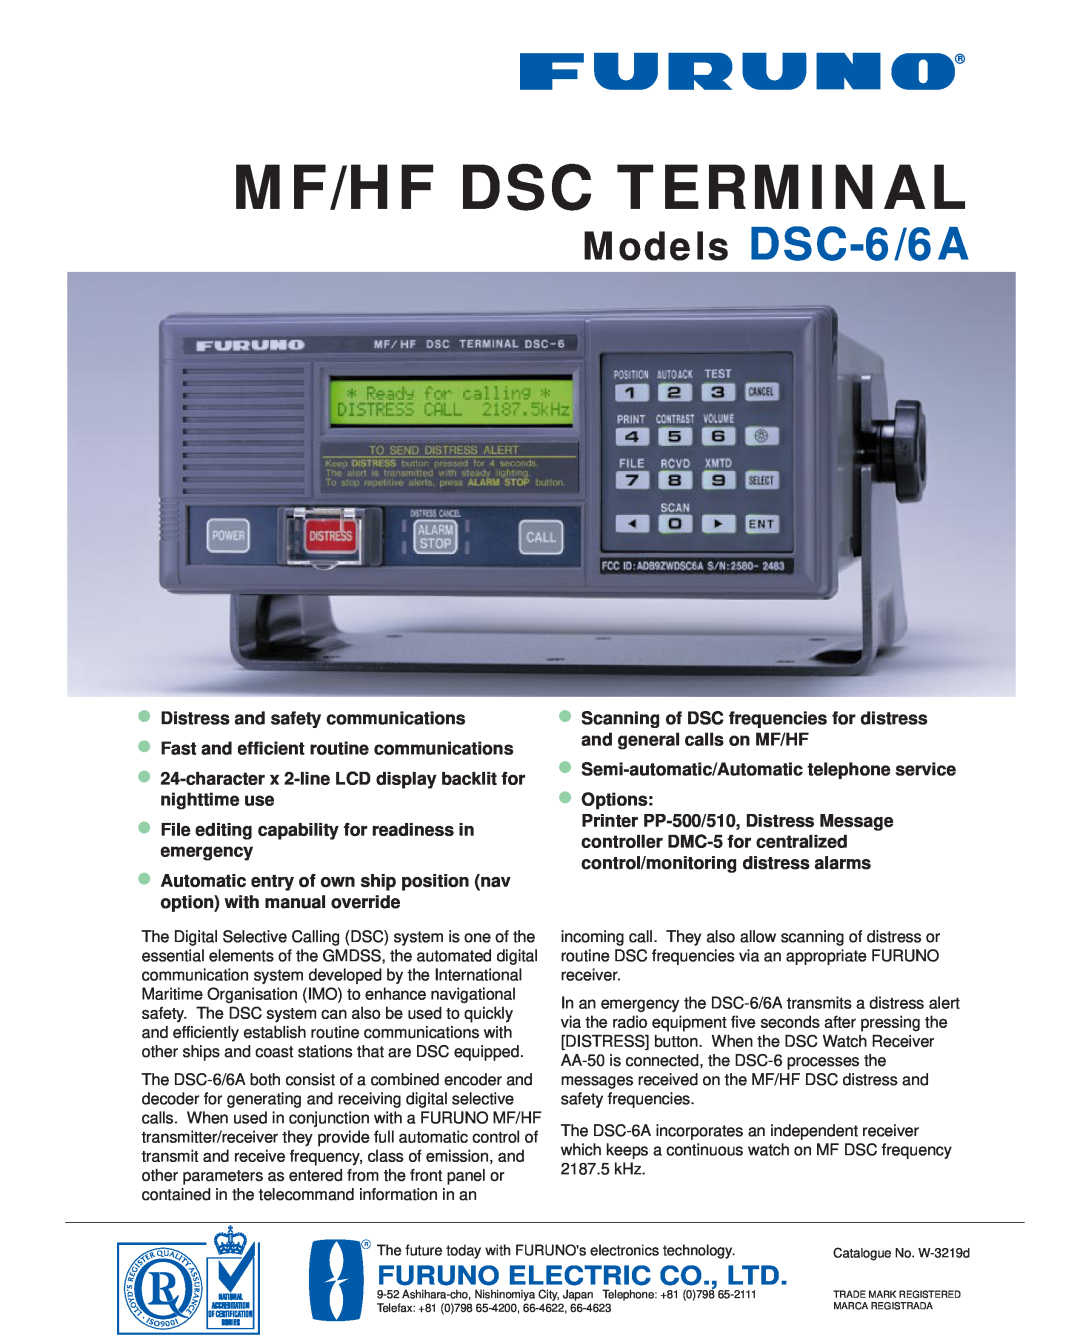 Furuno manual Mf/Hf Dsc Terminal, Models DSC-6/6A 